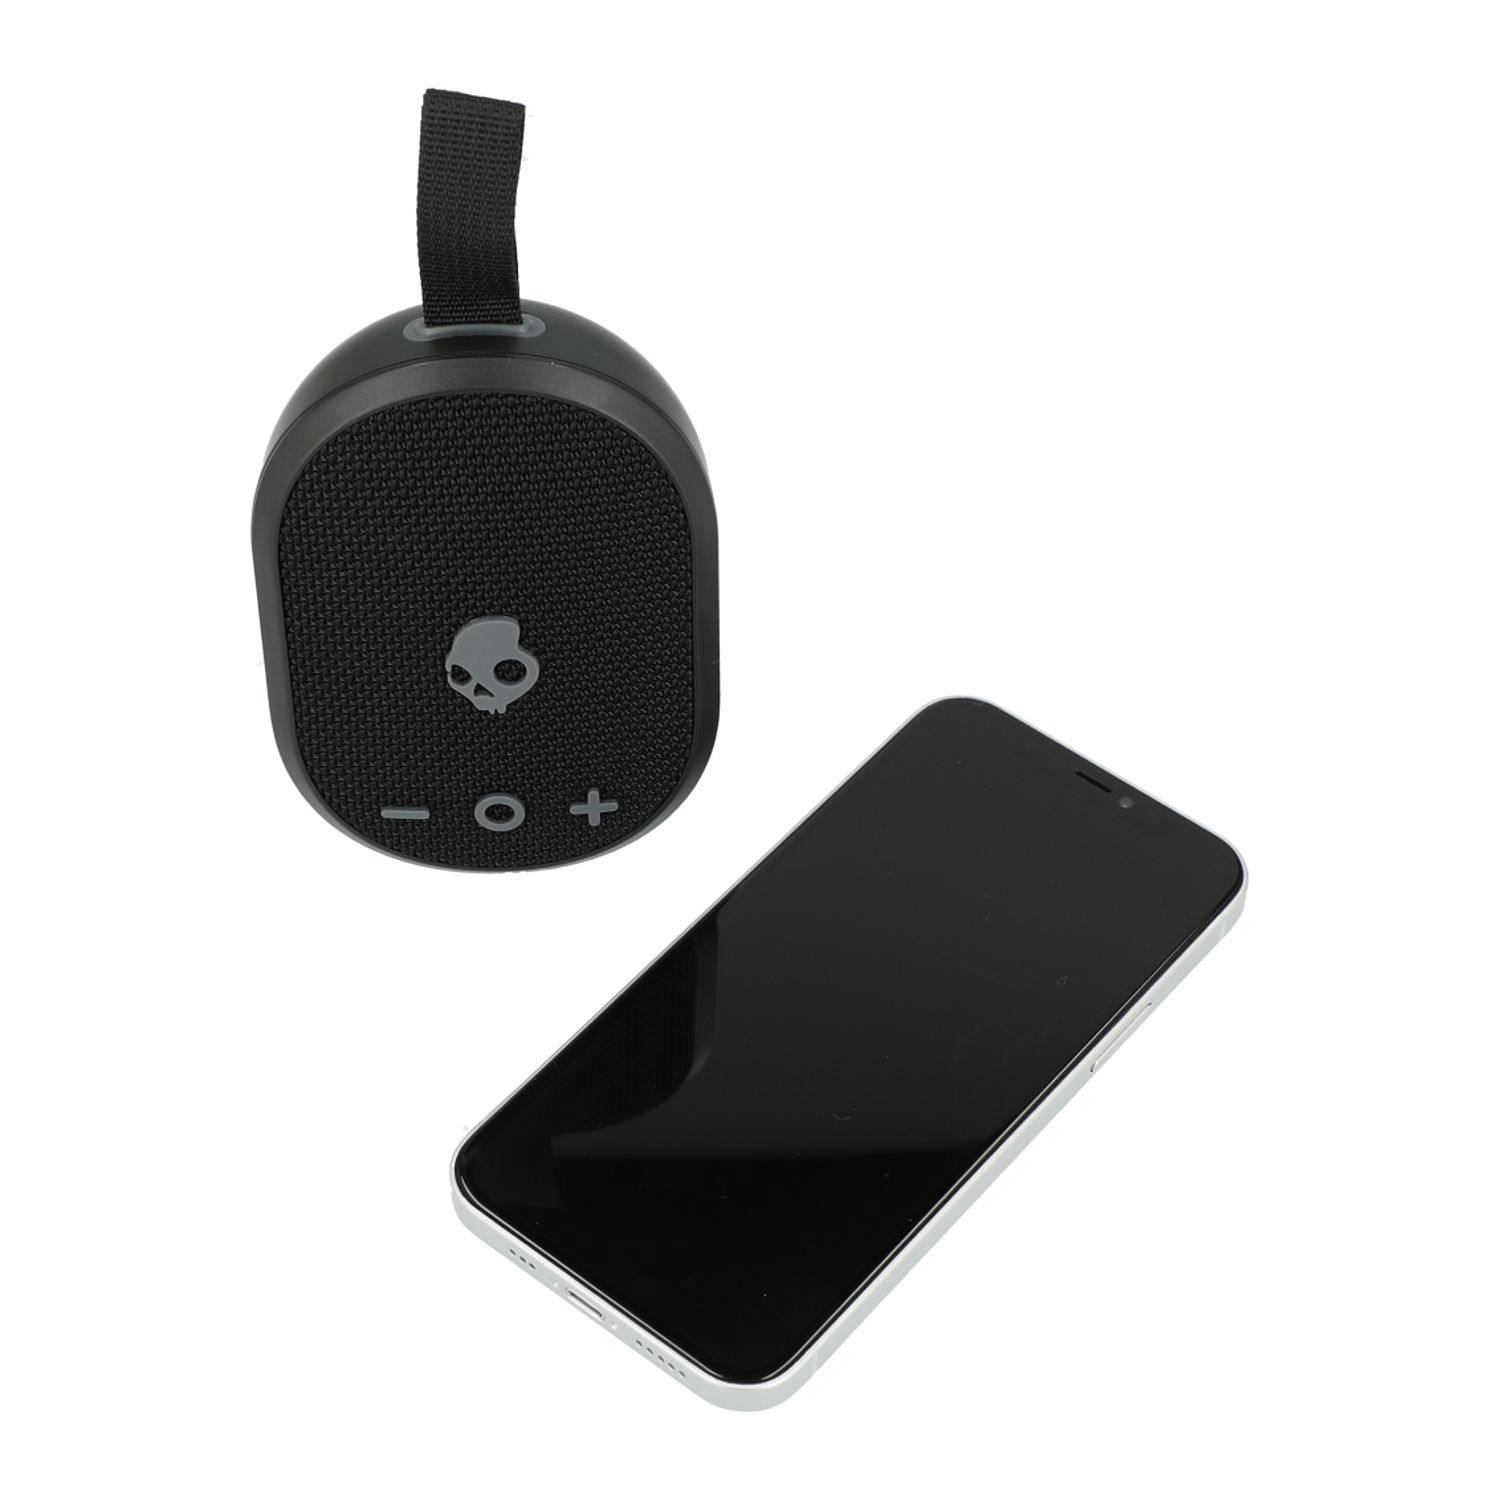 Skullcandy Ounce Bluetooth Speaker - additional Image 1